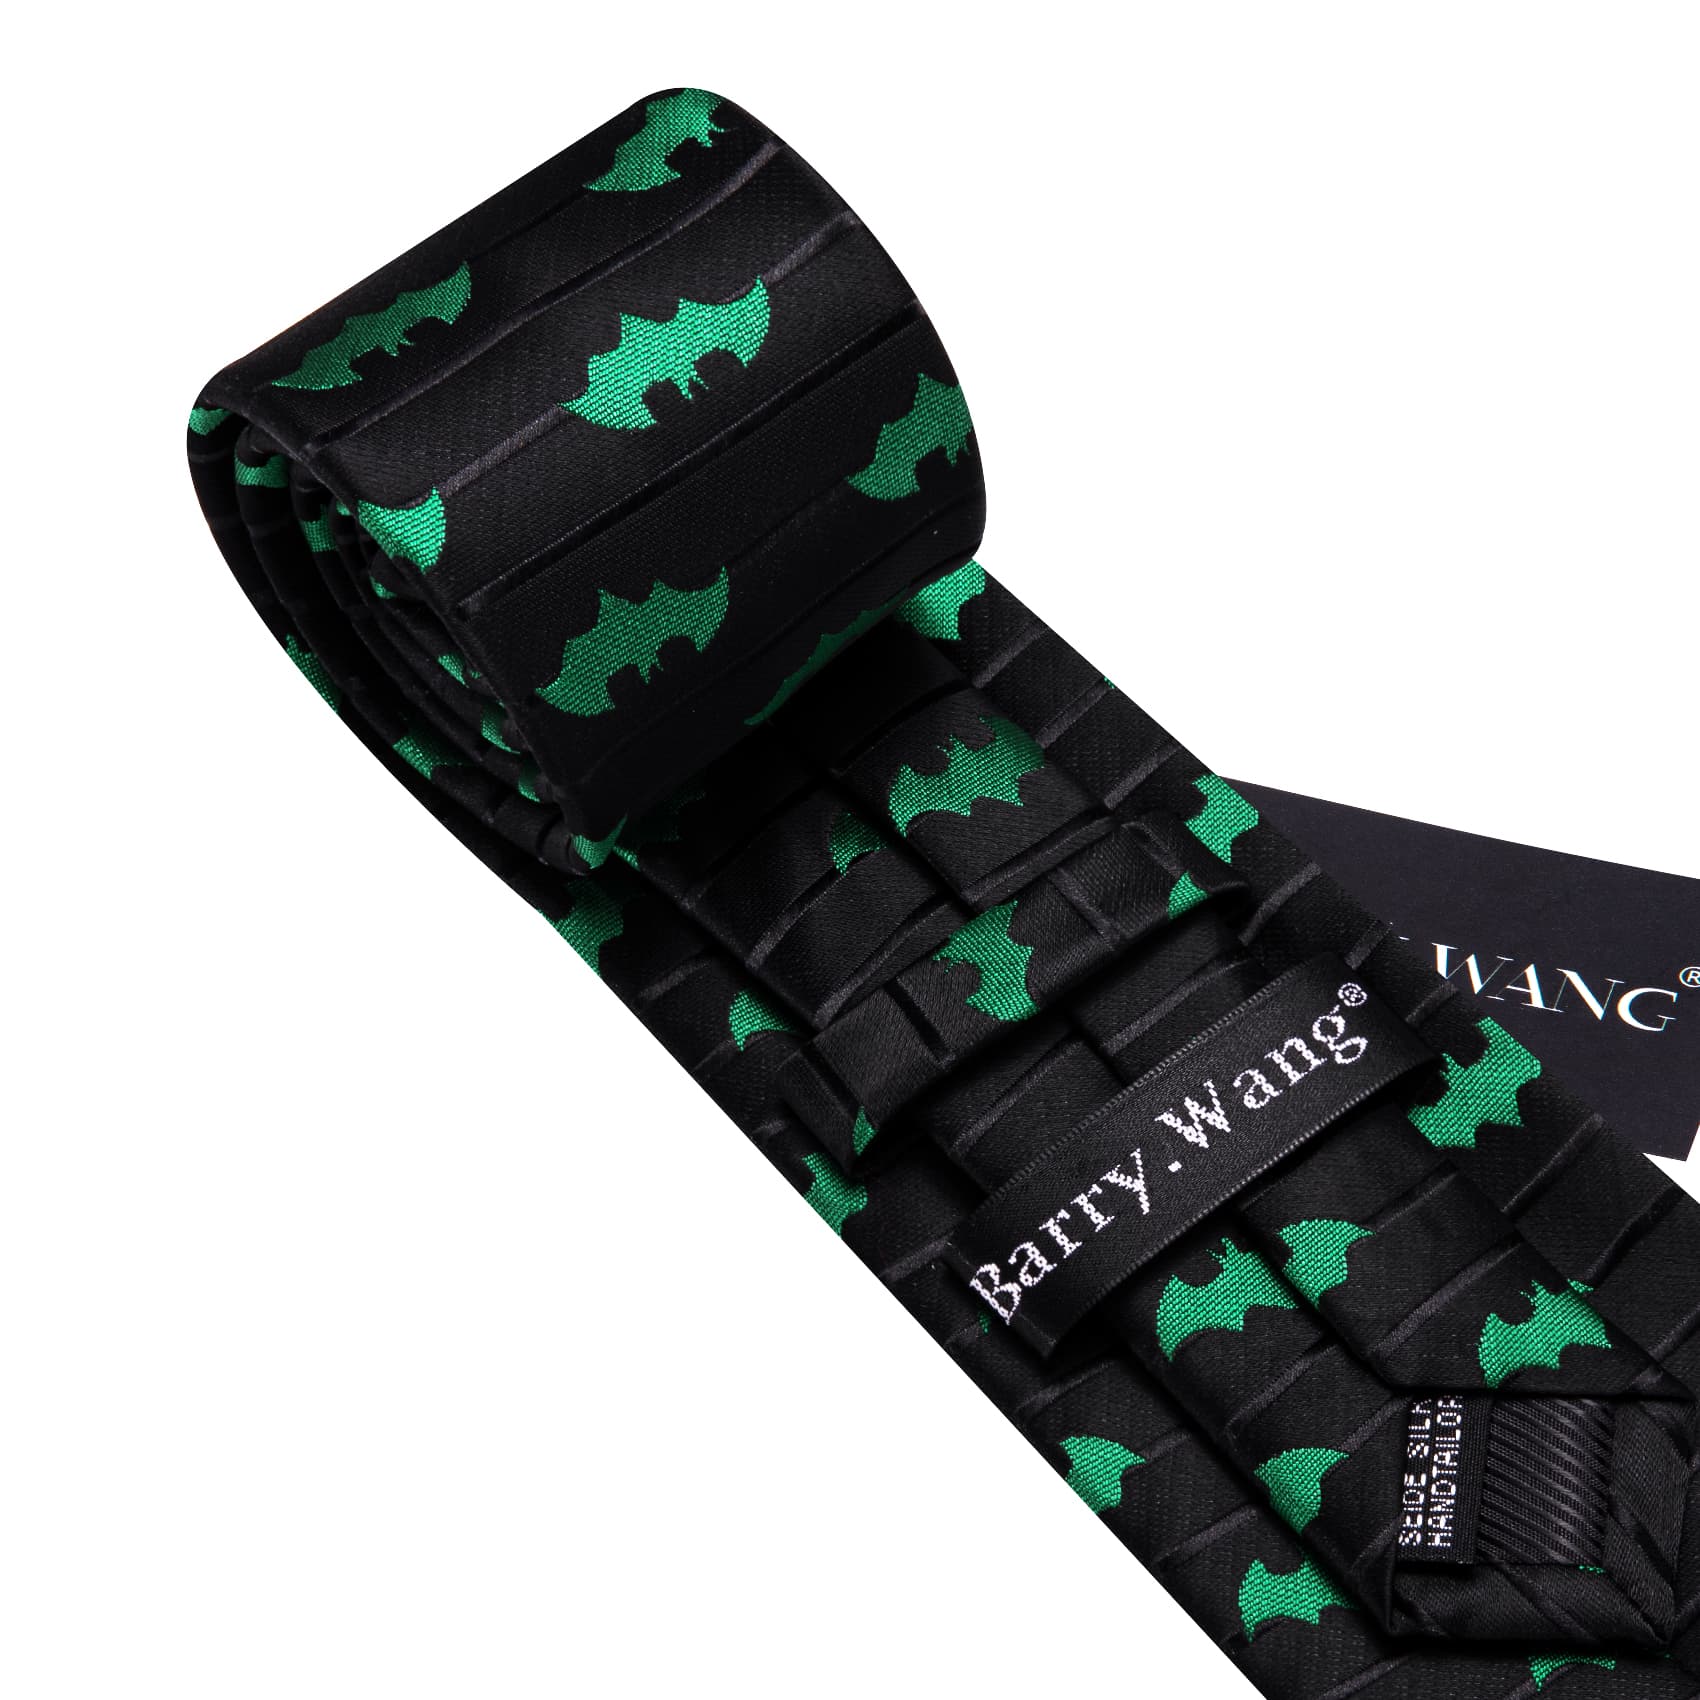 Tie Jacquard Green Bat Black Novelty Necktie Hanky Cufflinks Set